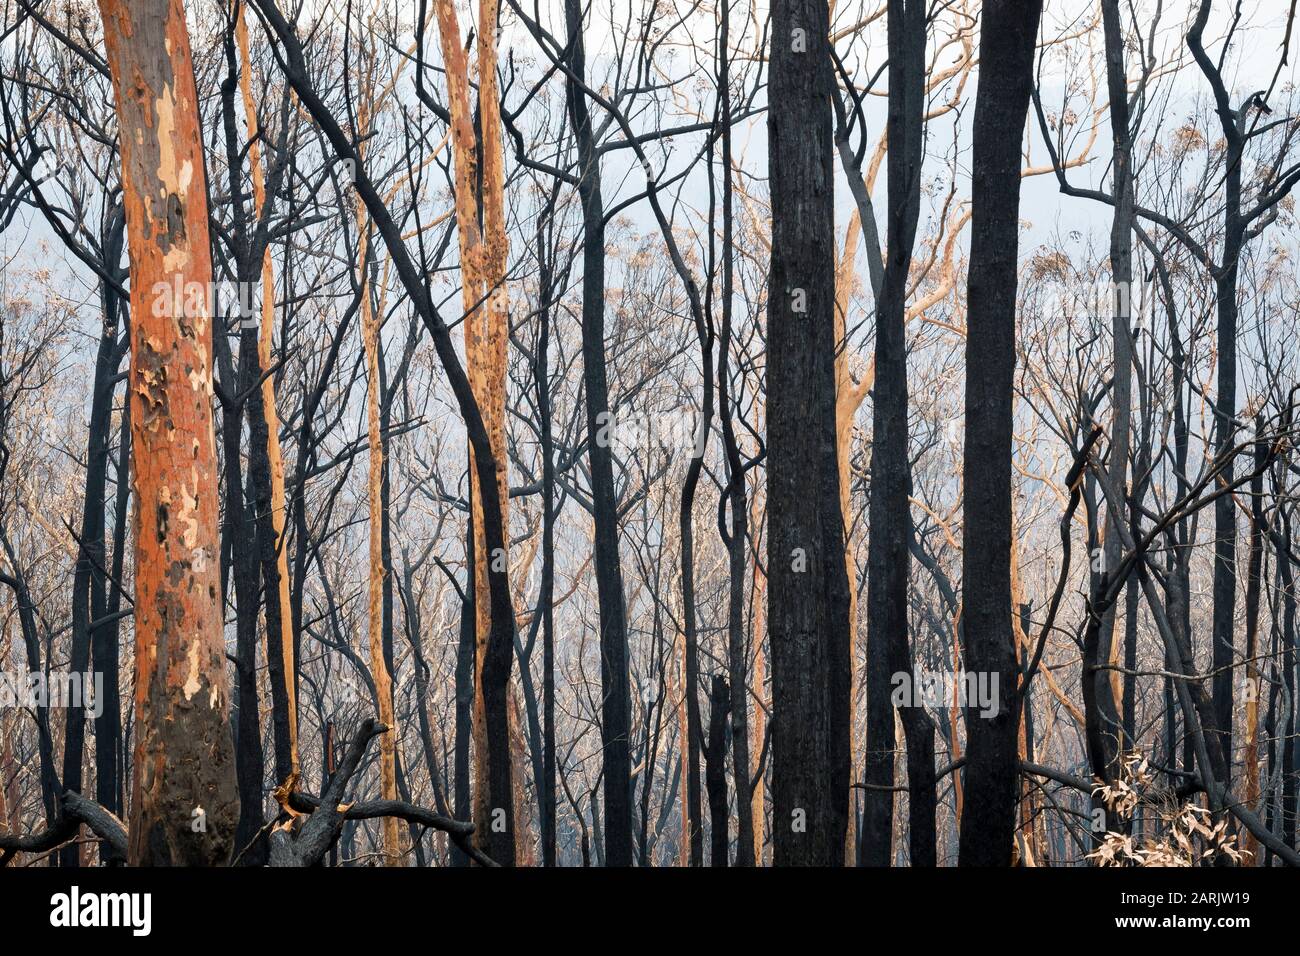 Mogo residents fleed as bushfire rages up the NSW south coast during the Australian Bushfires in 2020, Mogo, New South Wales, Australia © Hugh Peterswald/Alamy Stock Photo